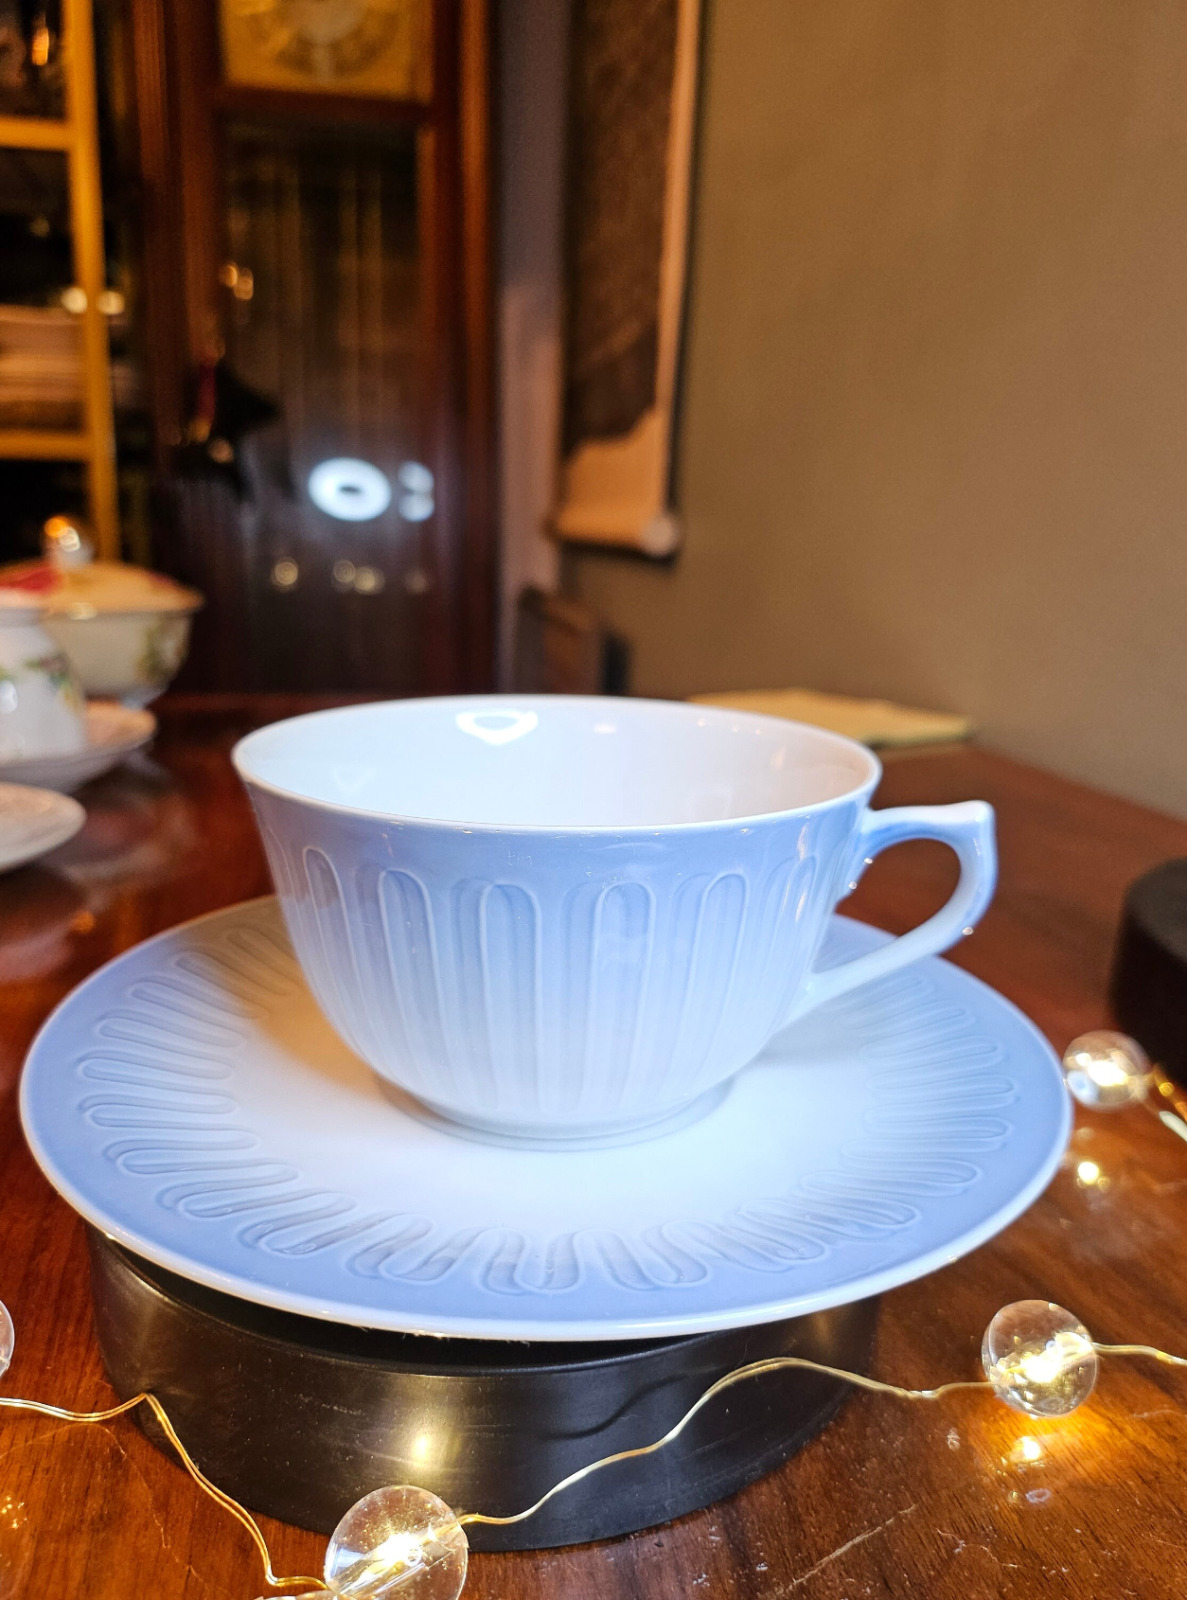 Antique and Vintage TeaCup and Saucer Sets Rare Single Bone Porcelain China